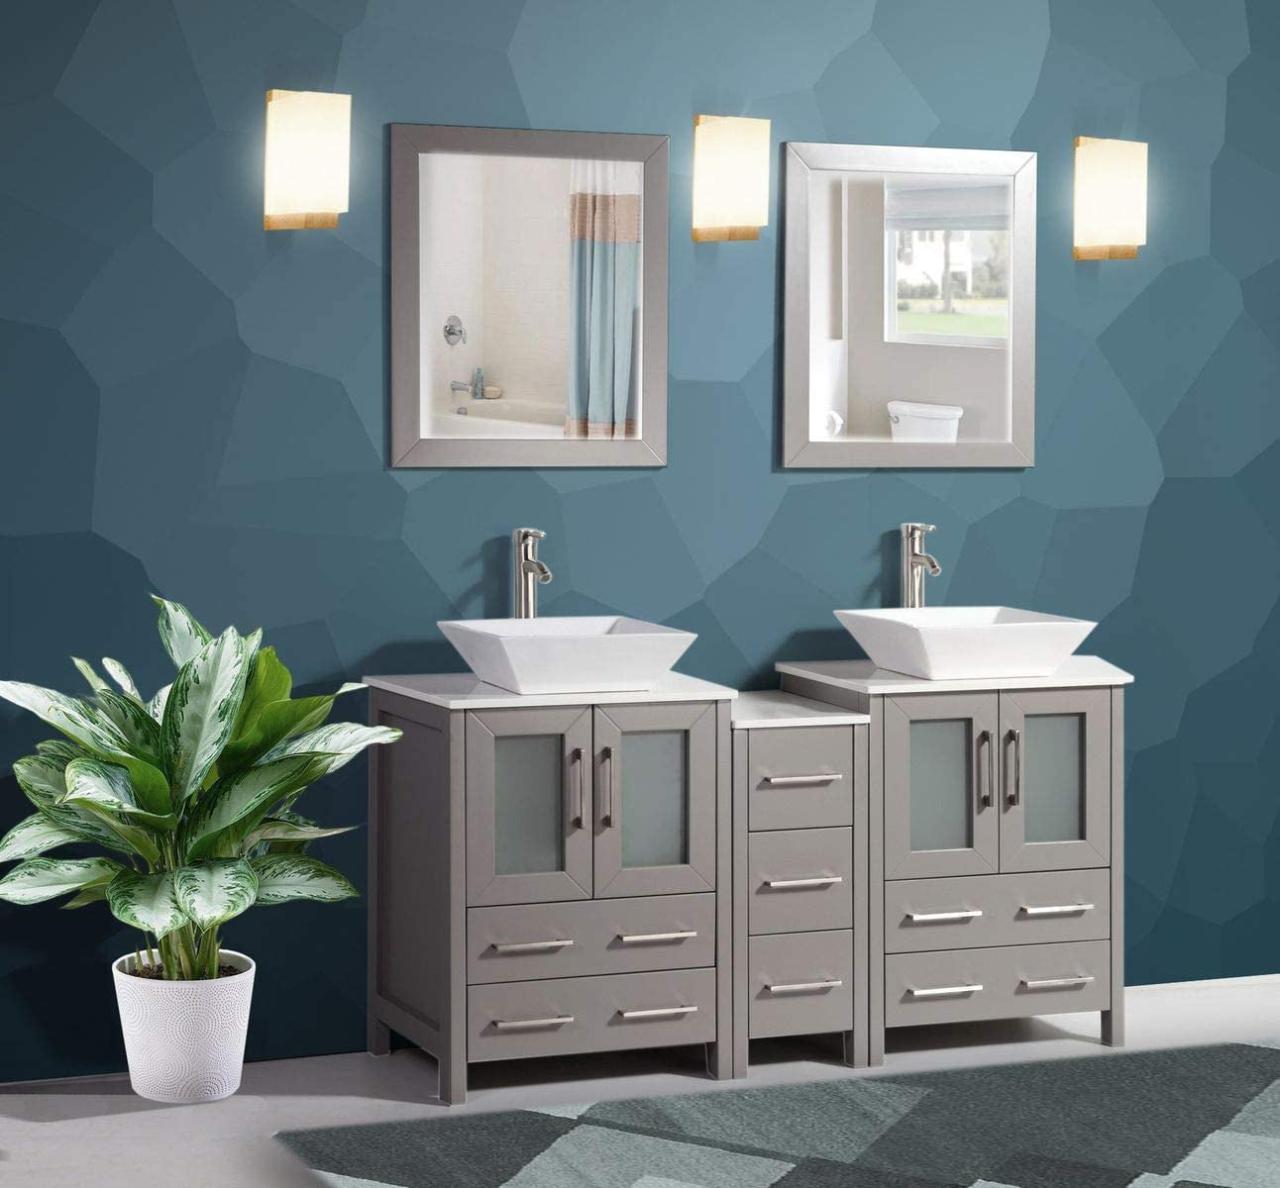 Quartz polaris bathroom innovates countertops vanity newswire aug press release